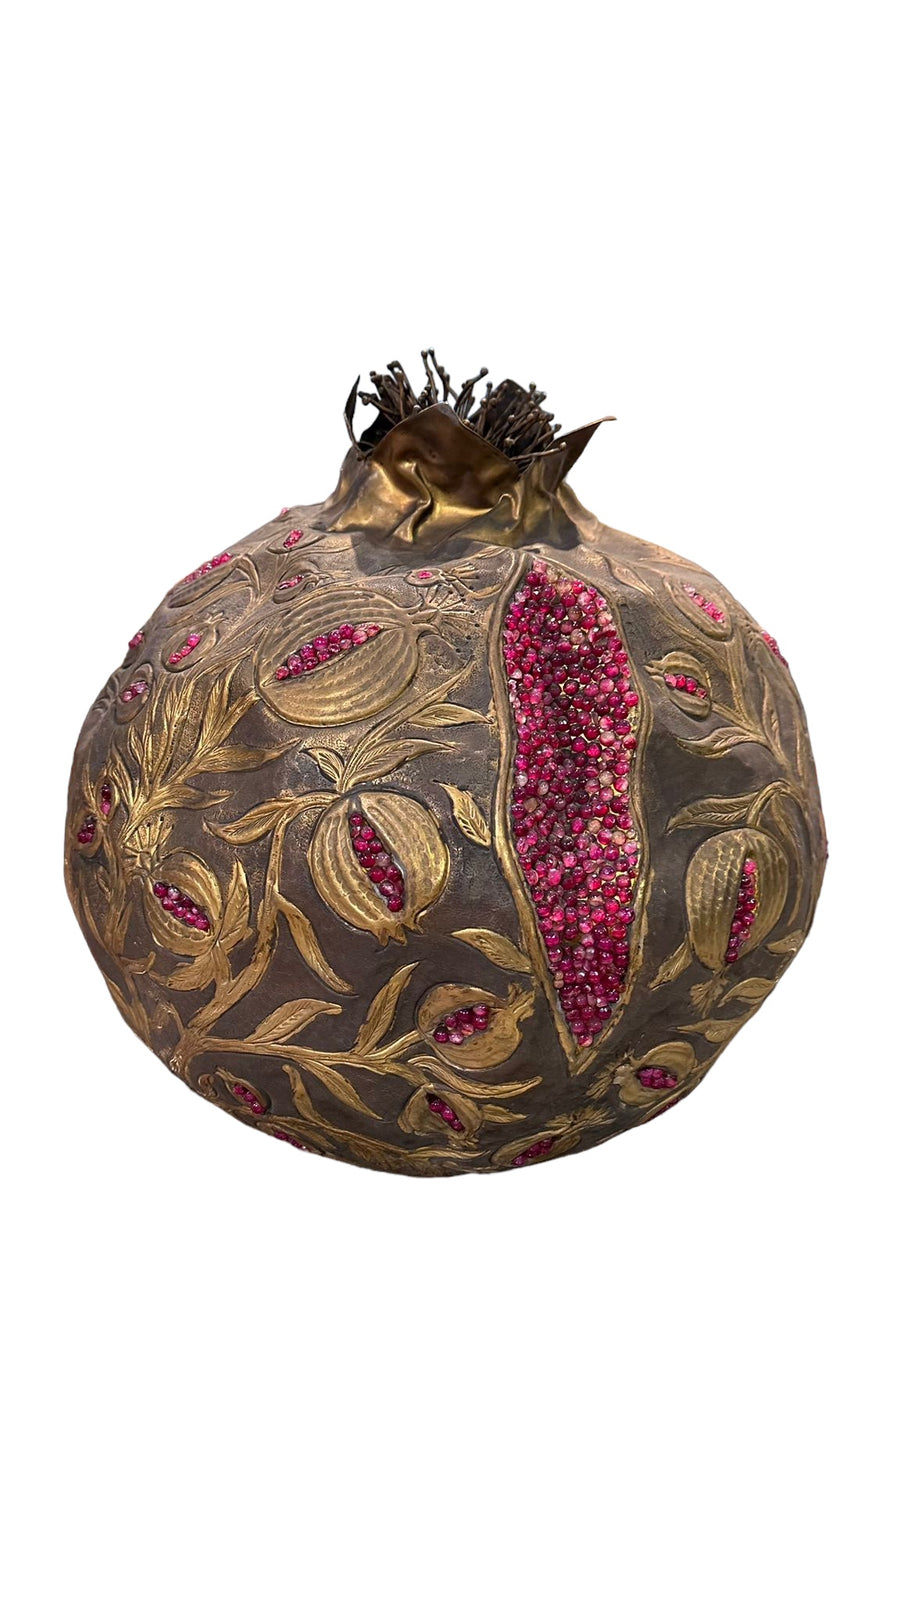 Pomegranate object